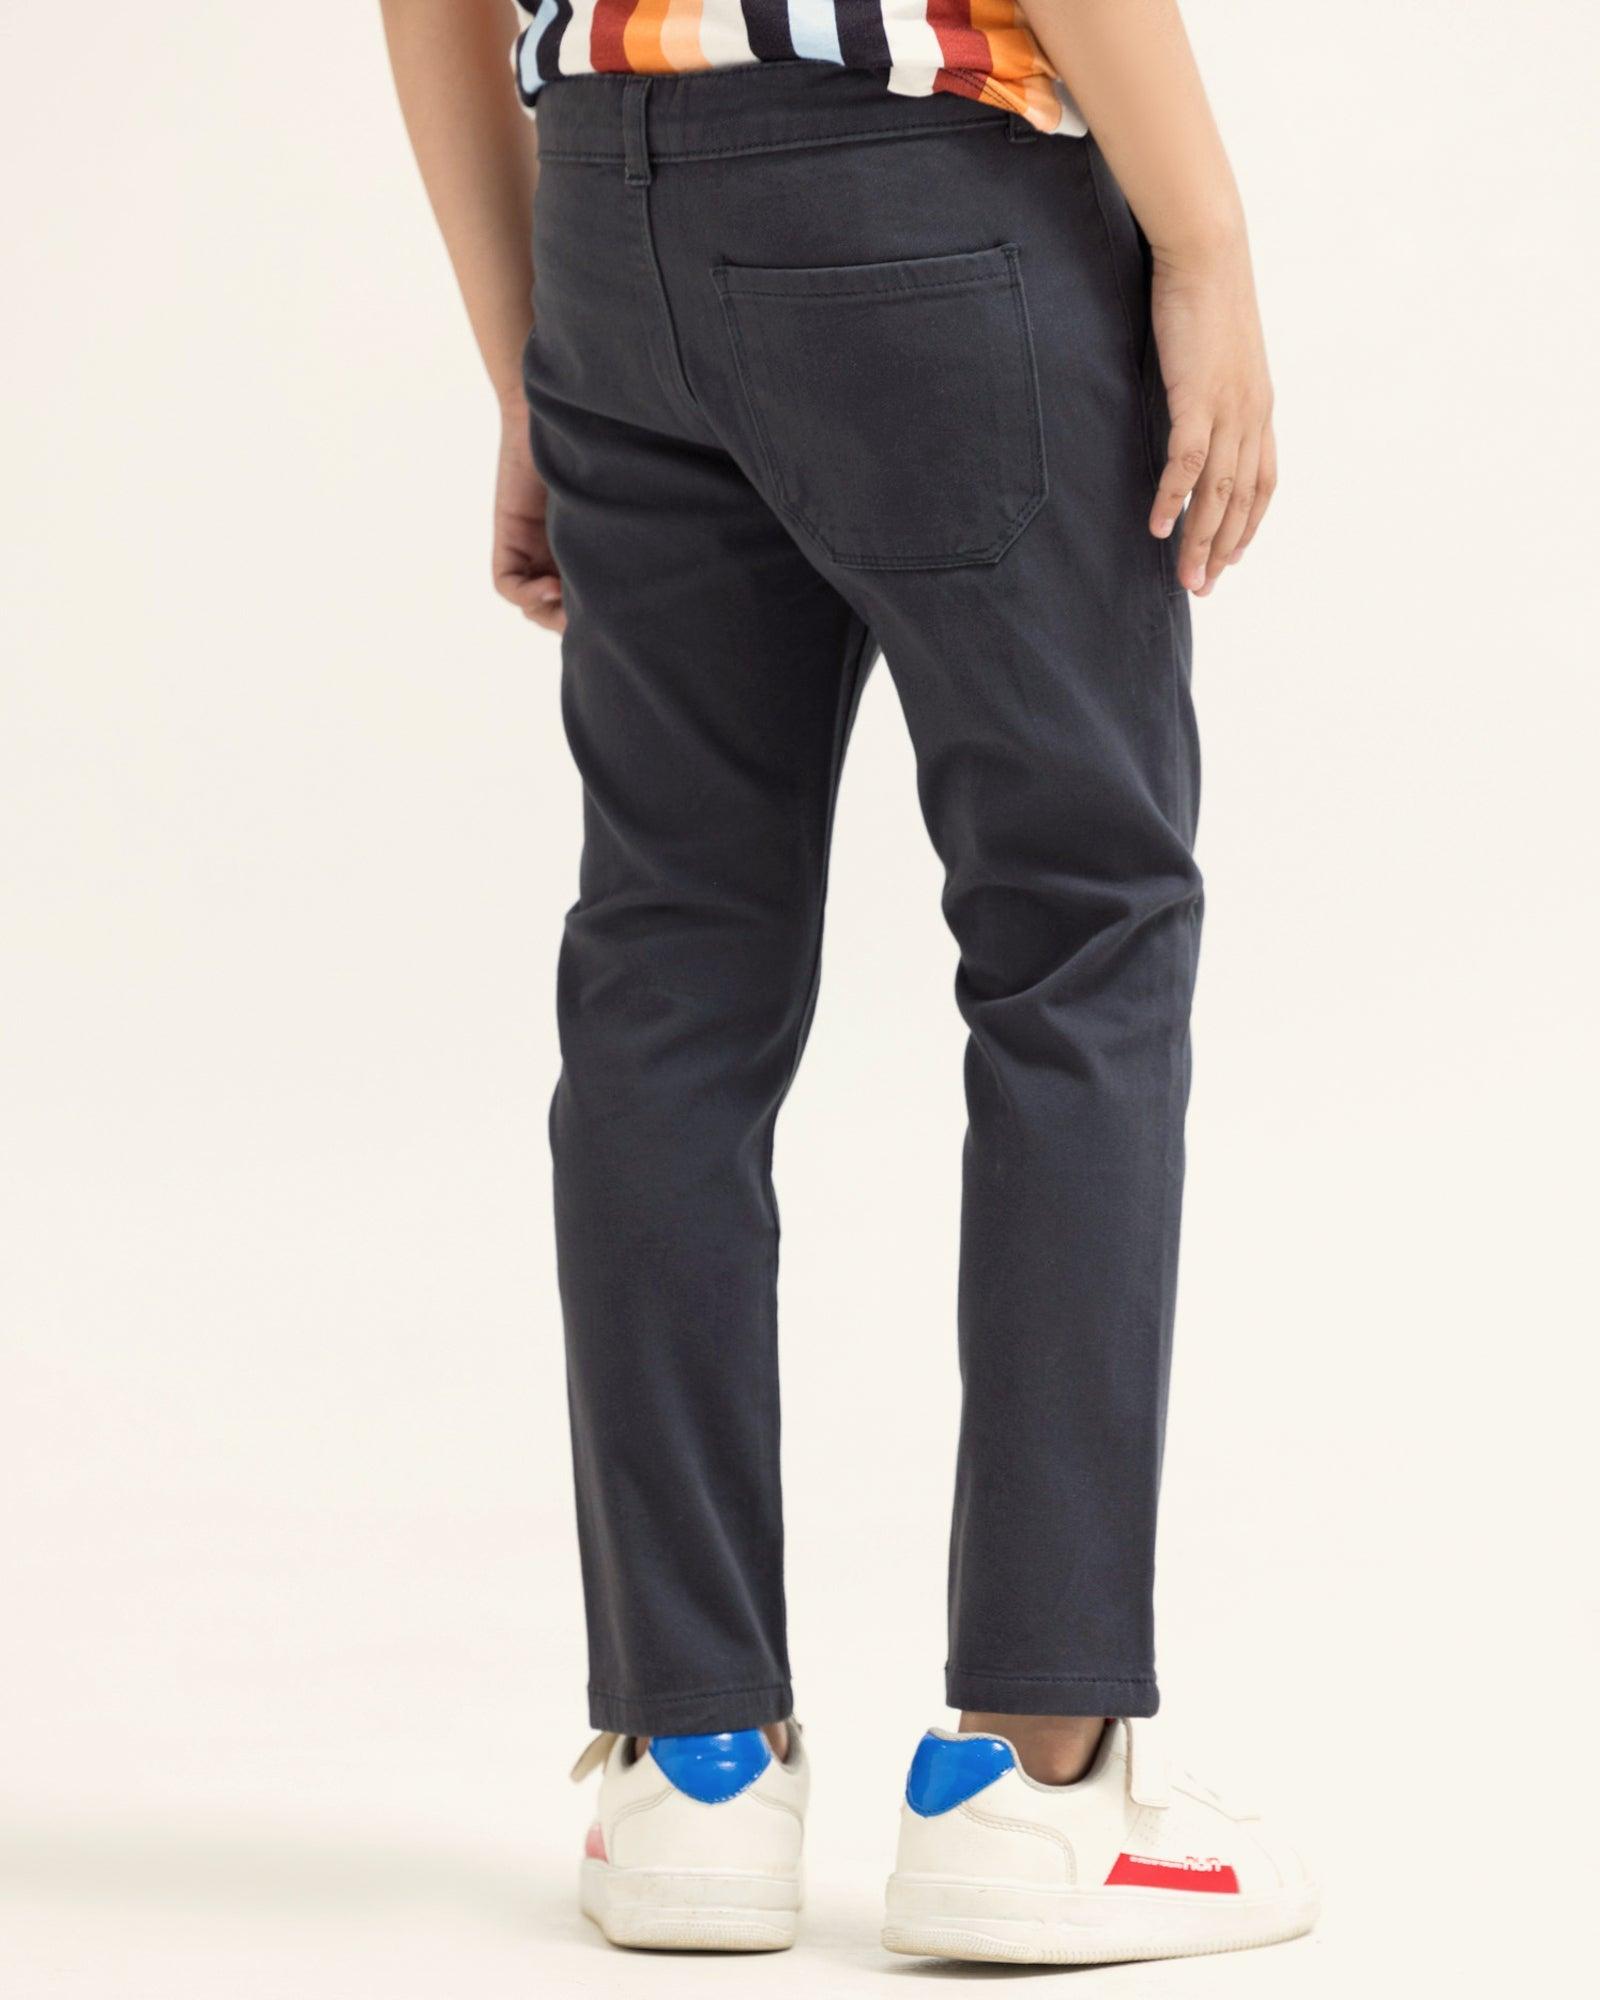 Genie Slim Jenkins  Designer jeans, Slim, Clothes design